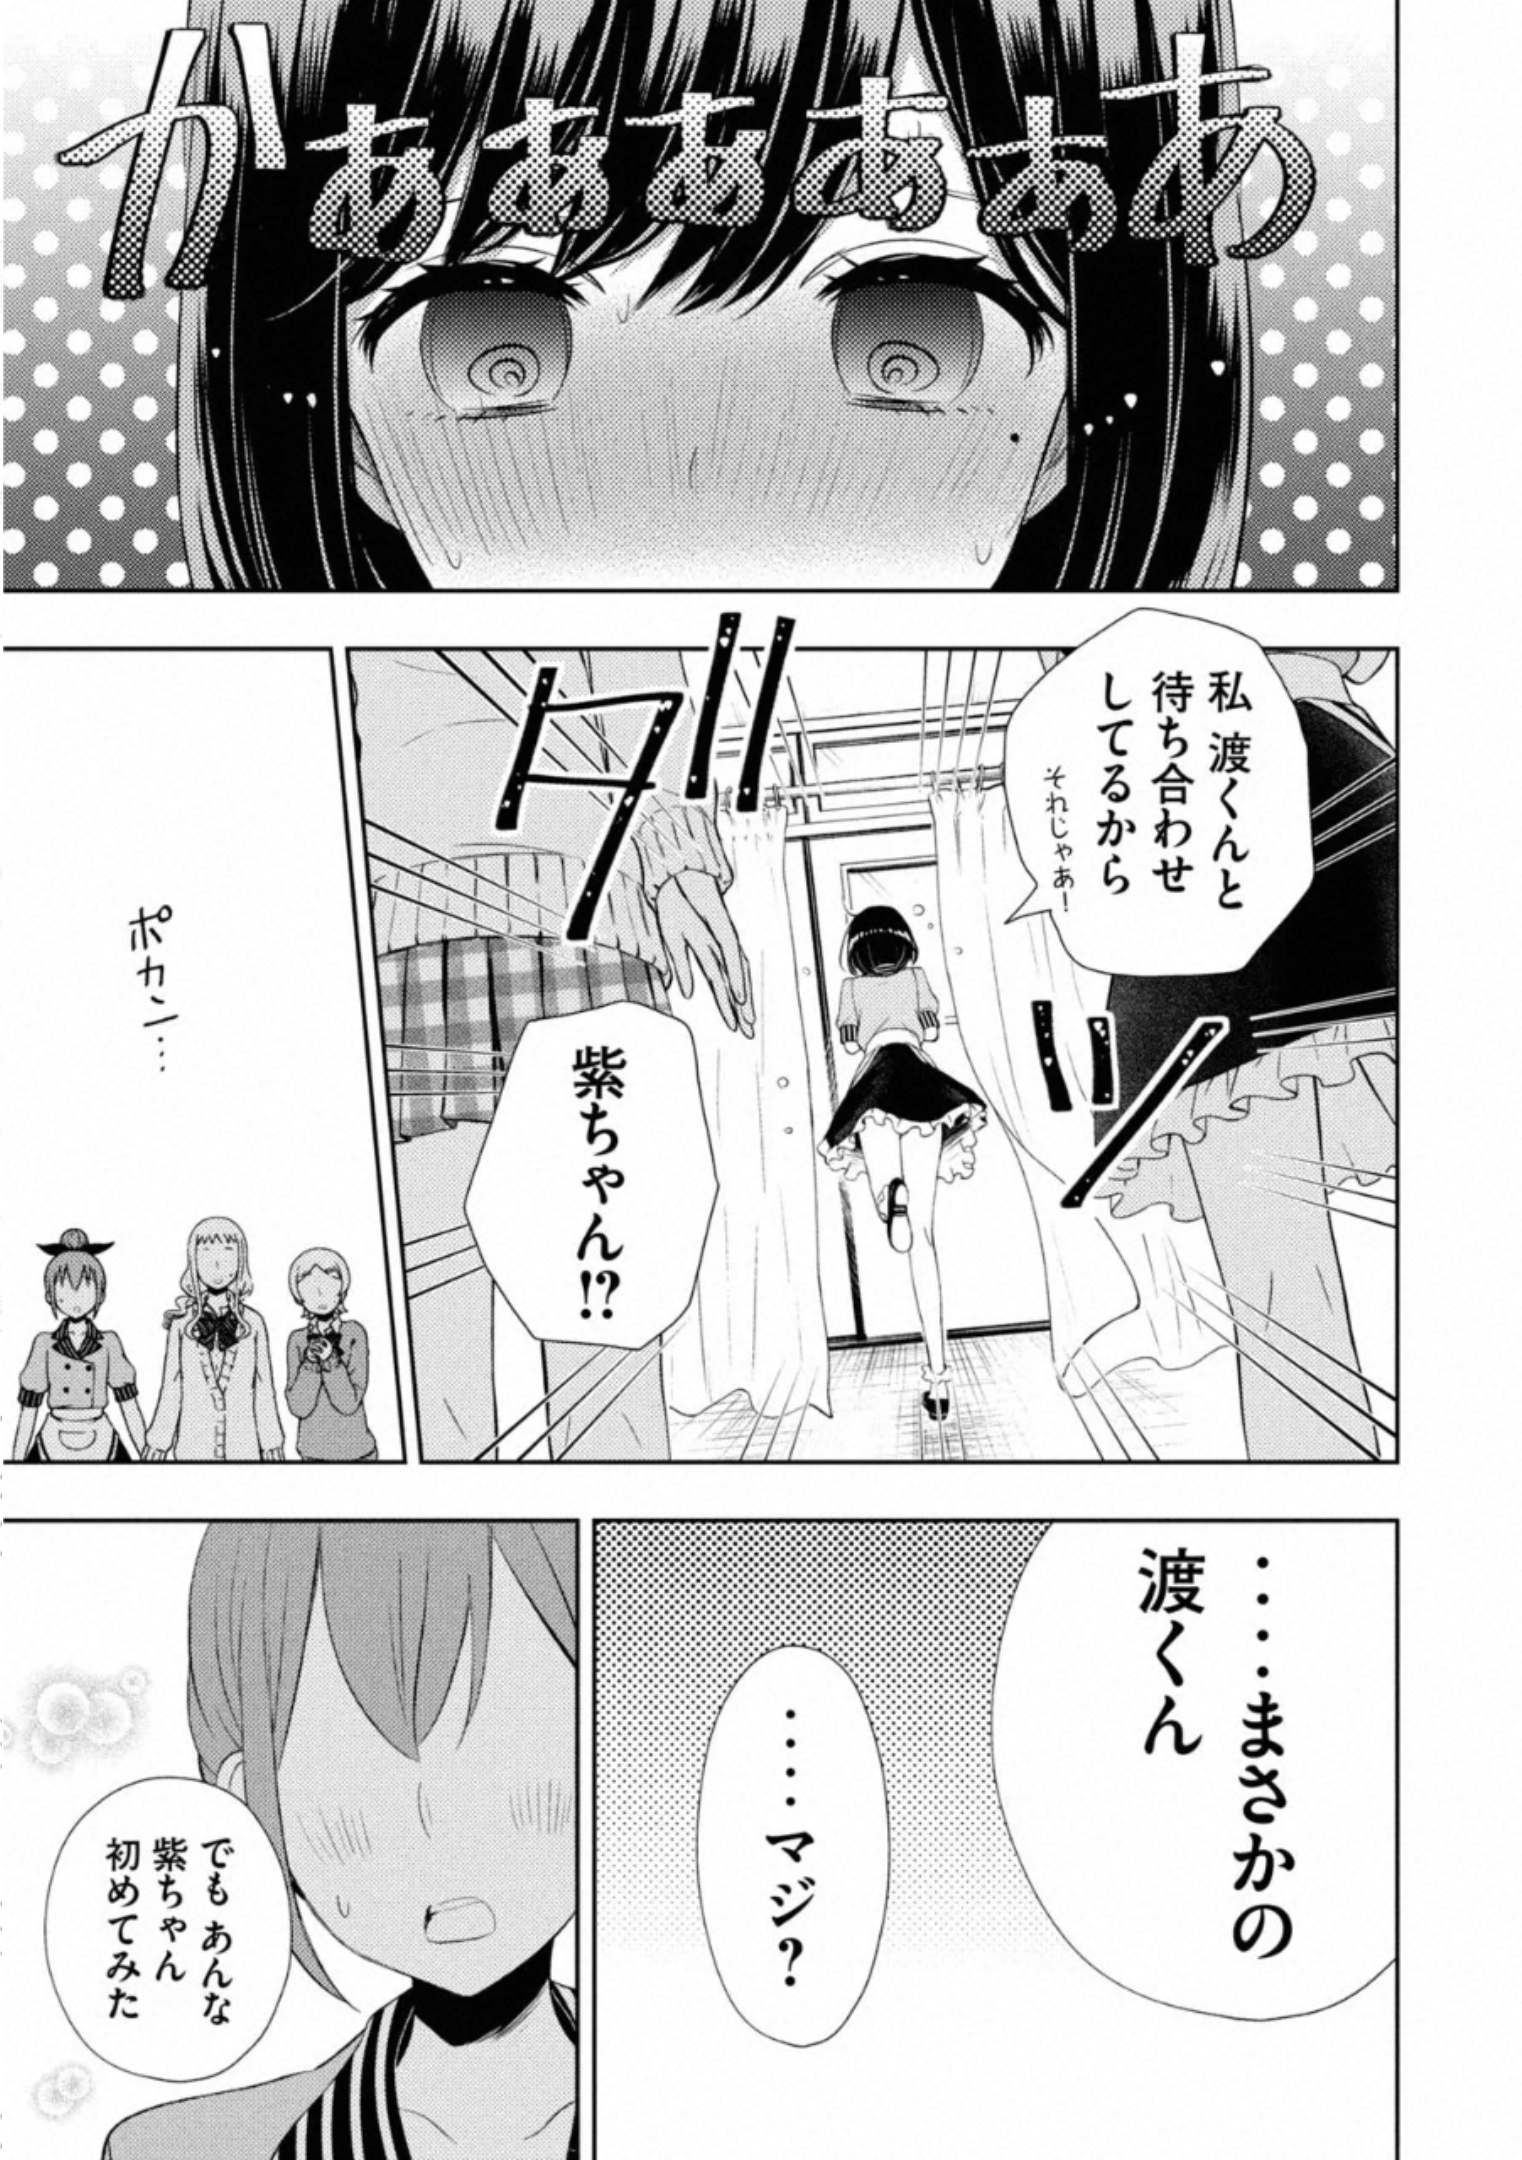 Watari-kun no xx ga Houkai Sunzen - Chapter 58 - Page 3